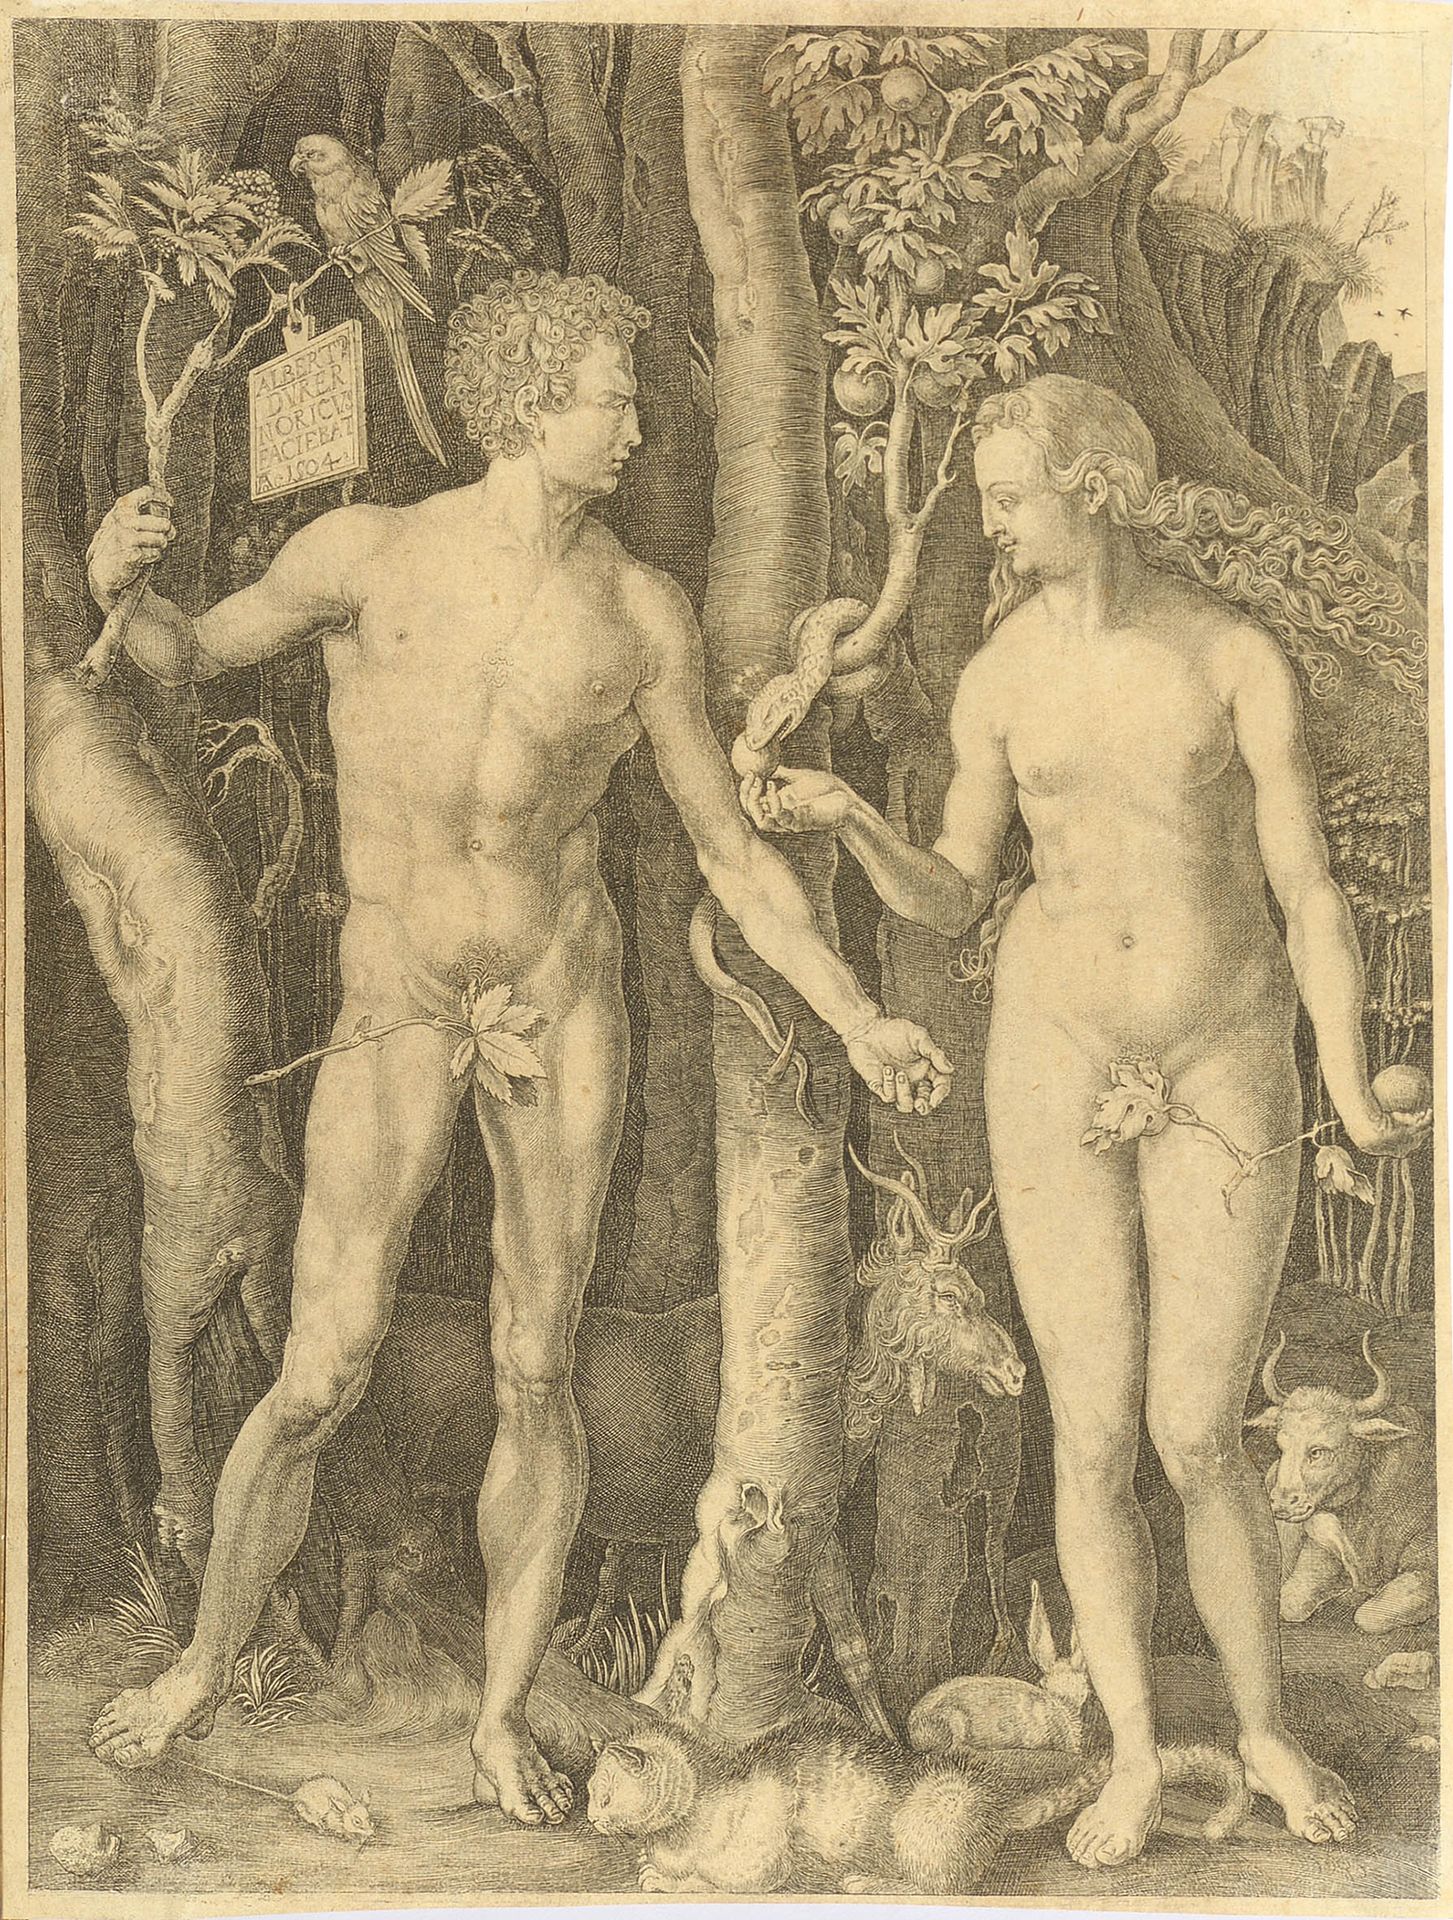 DURER Albrecht (1471 - 1528) "亚当和夏娃 "铜版画，黑白两色，铺设在有水印的纸上。版面上有Albert Dürer的签名，日期为1&hellip;